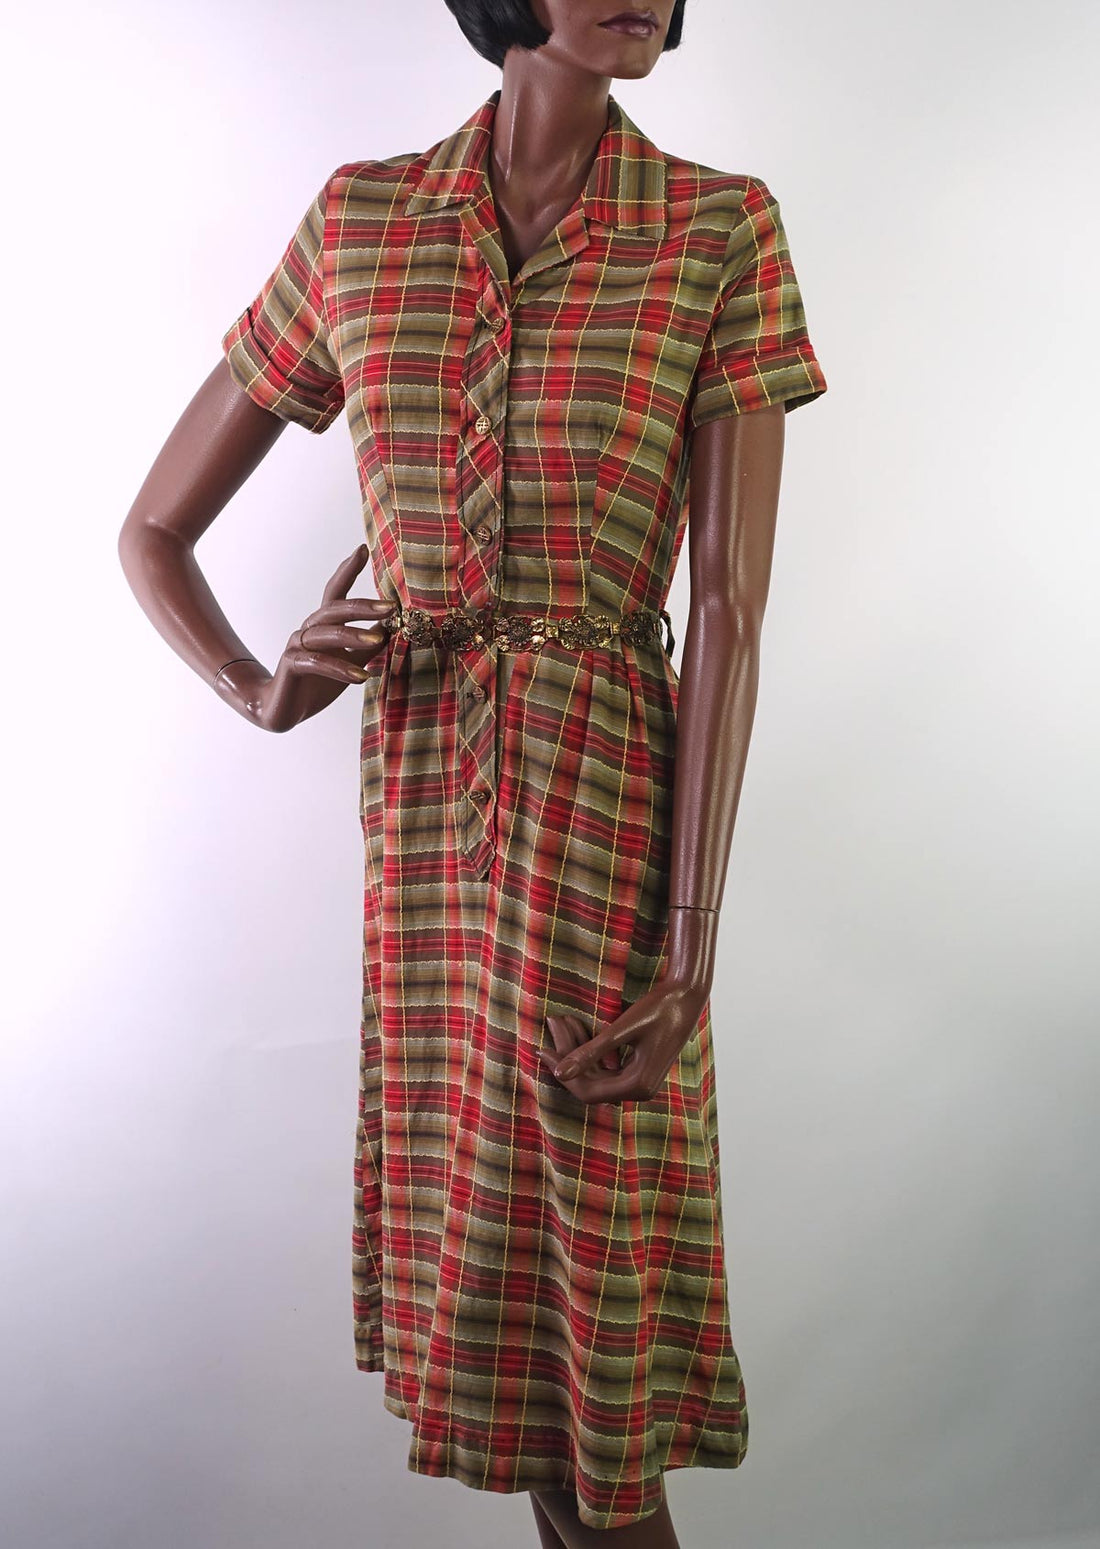 1950s short sleeved plaid dress